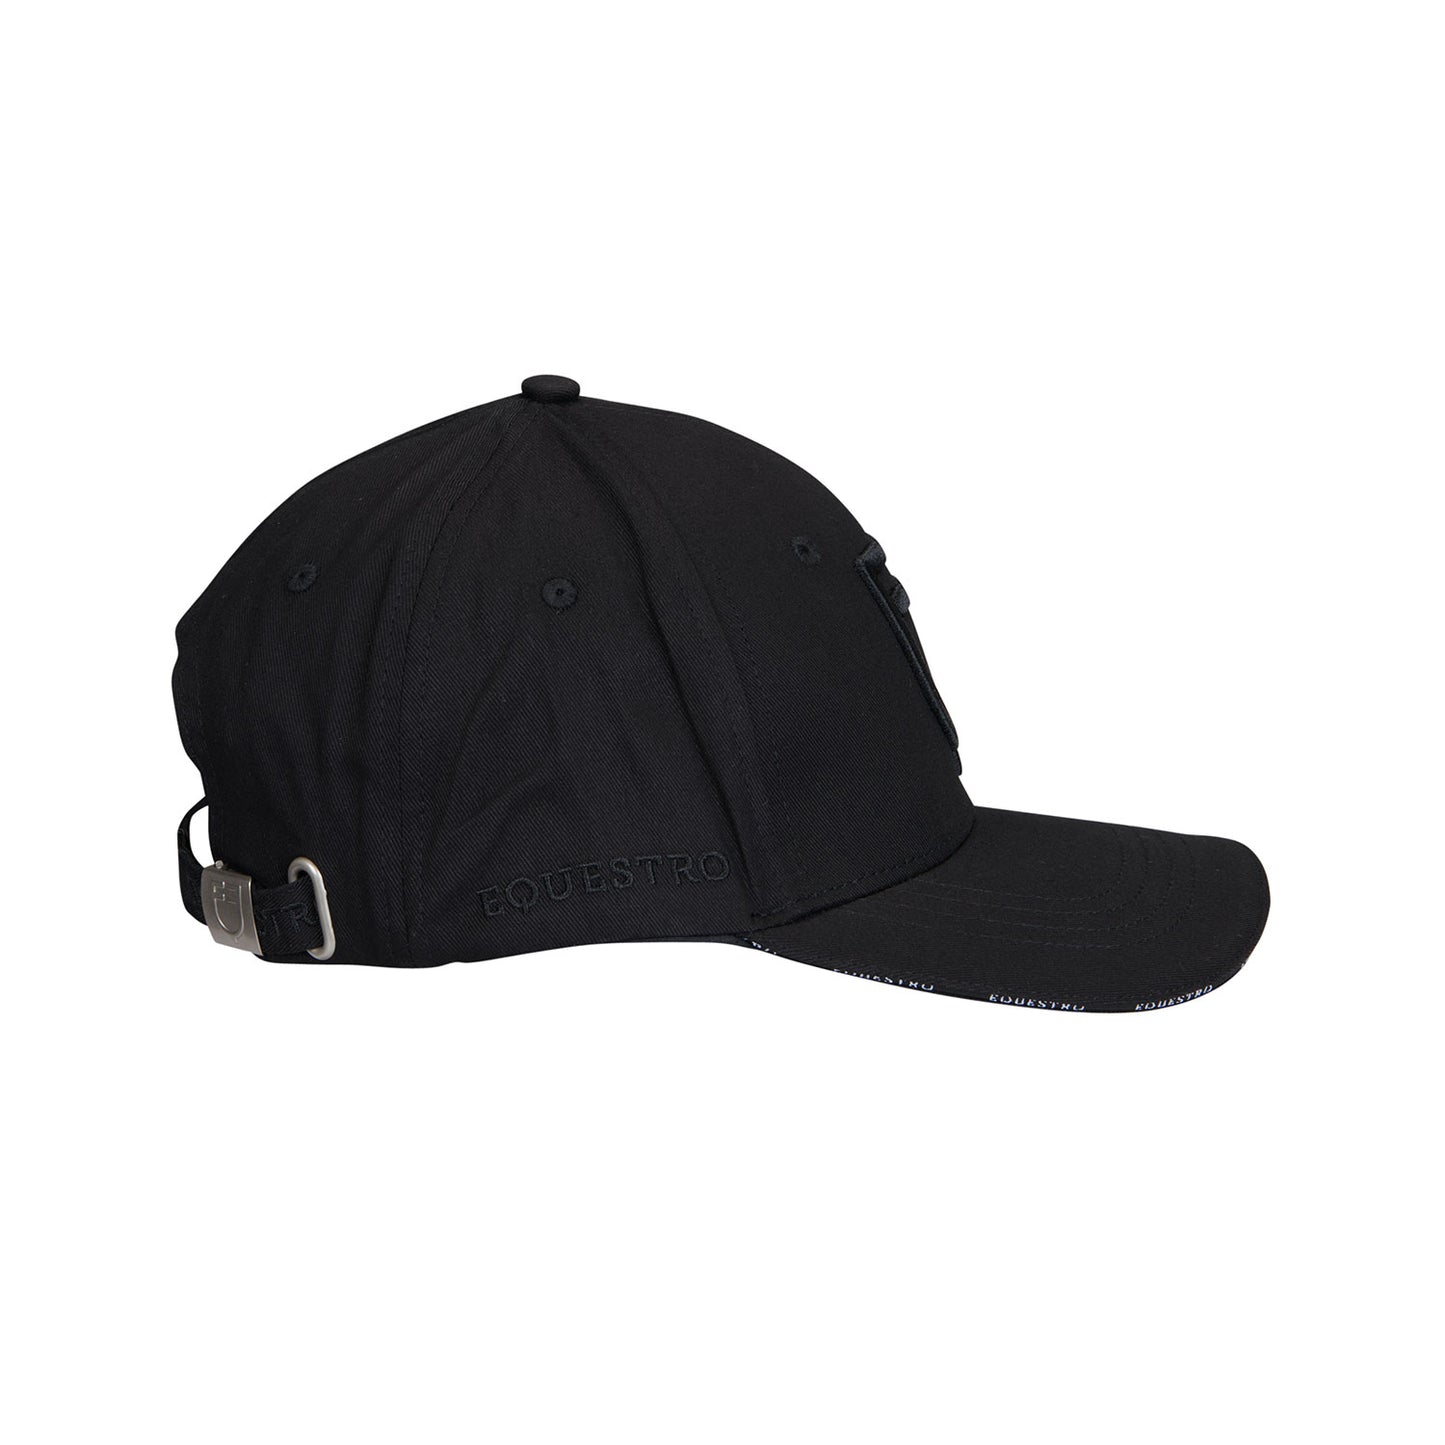 EQUESTRO - Baseball Hat